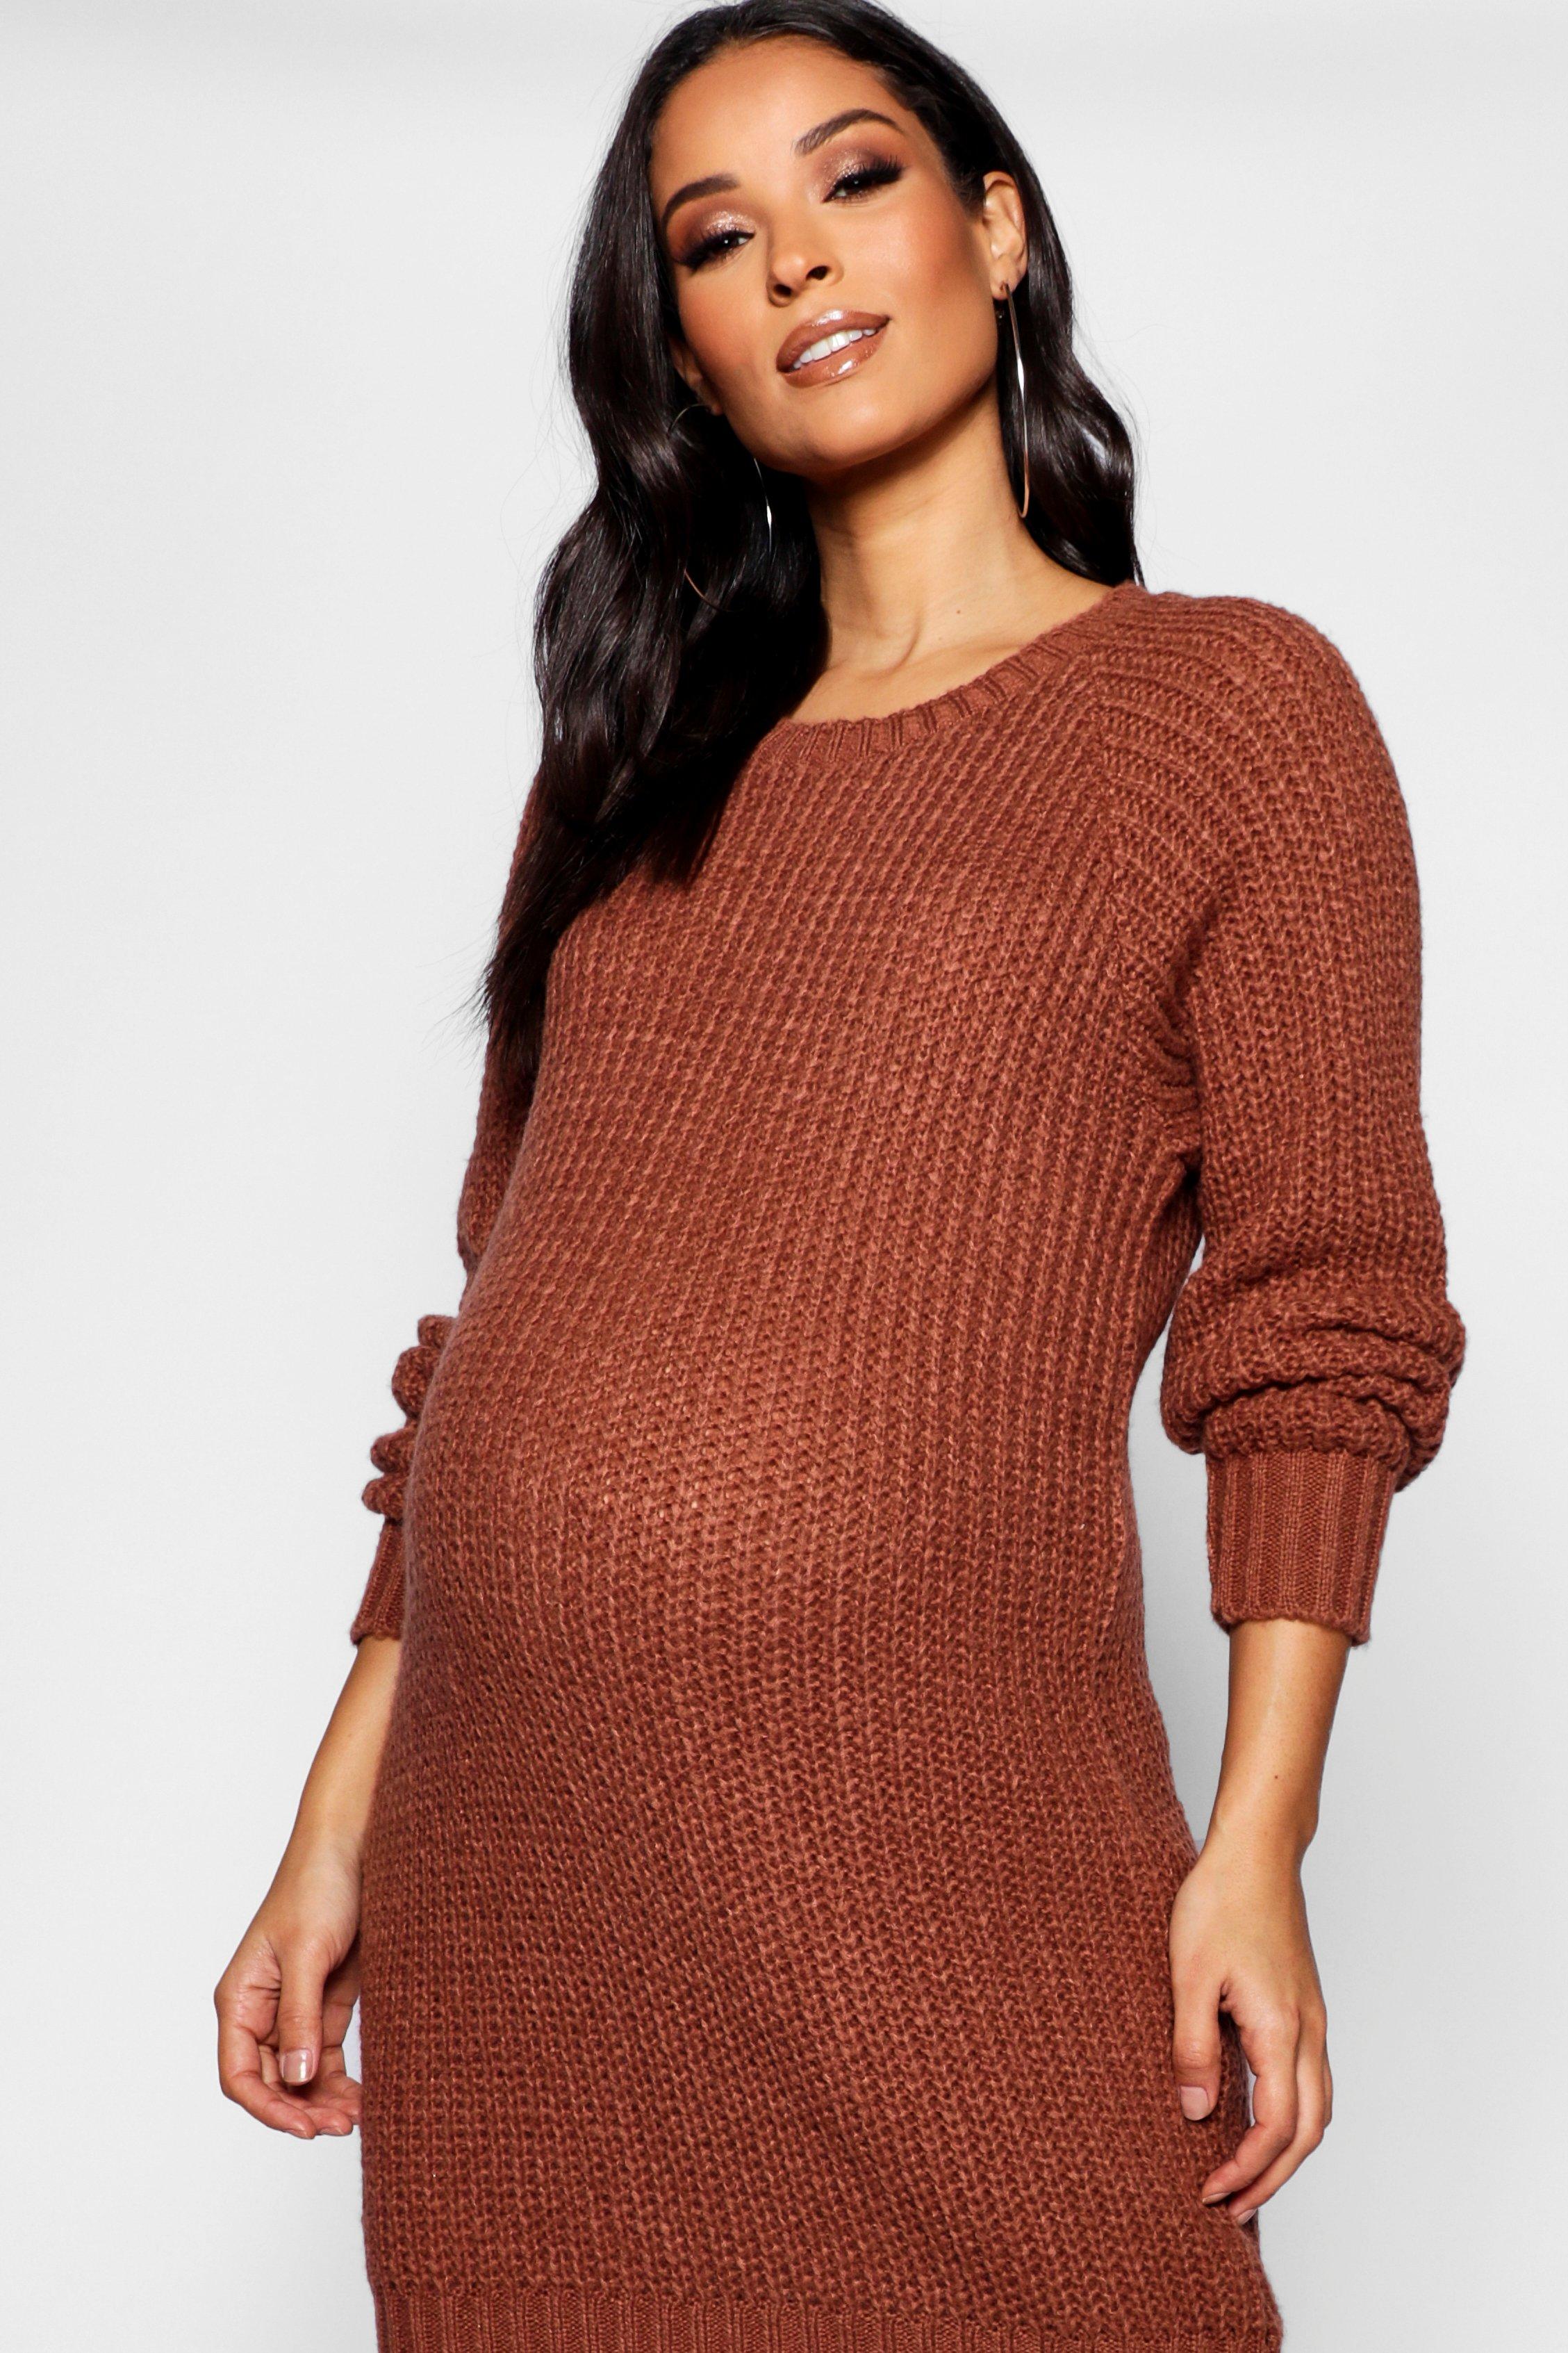 HAPPY MAMA Womens Maternity Knitted Bodycon Sweater Mini Jumper Dress 1095 